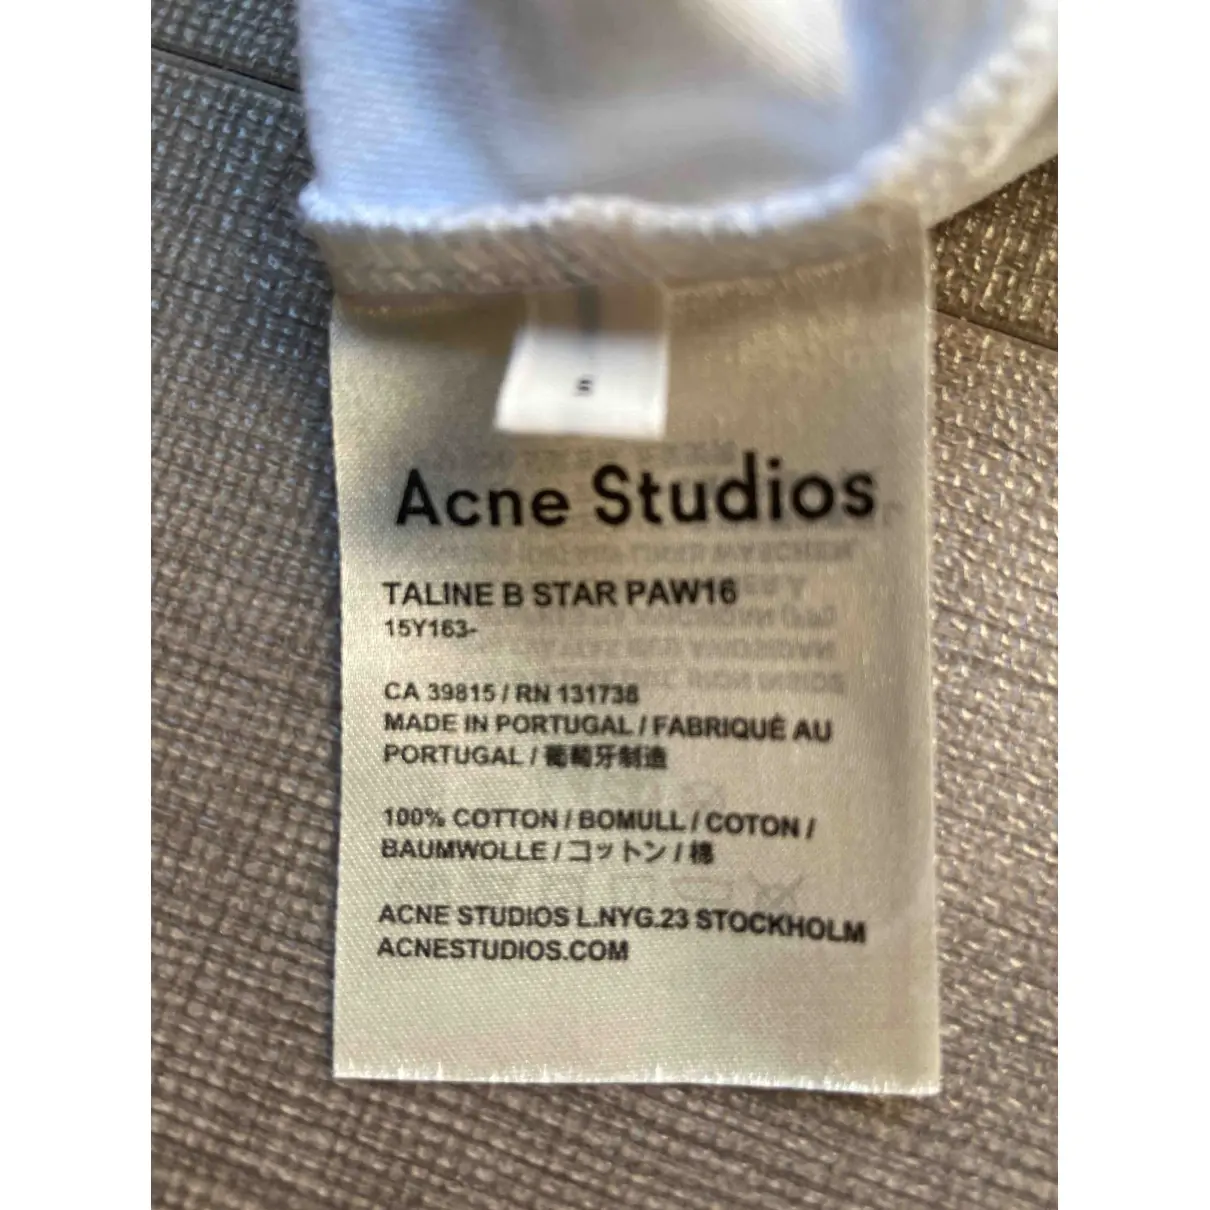 Buy Acne Studios White Cotton Top online